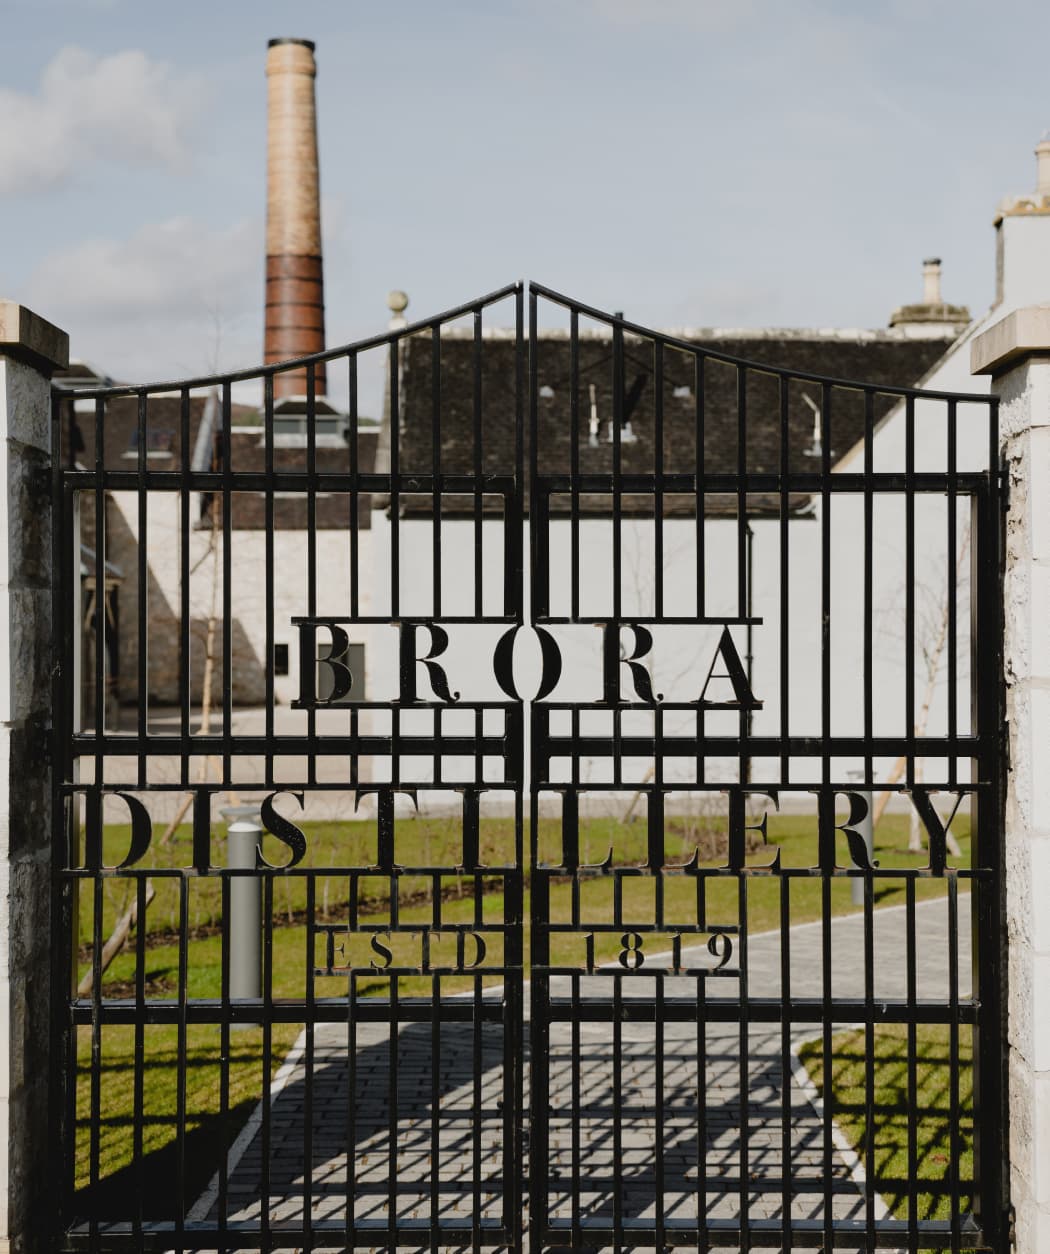 The gate of Brora Distillery